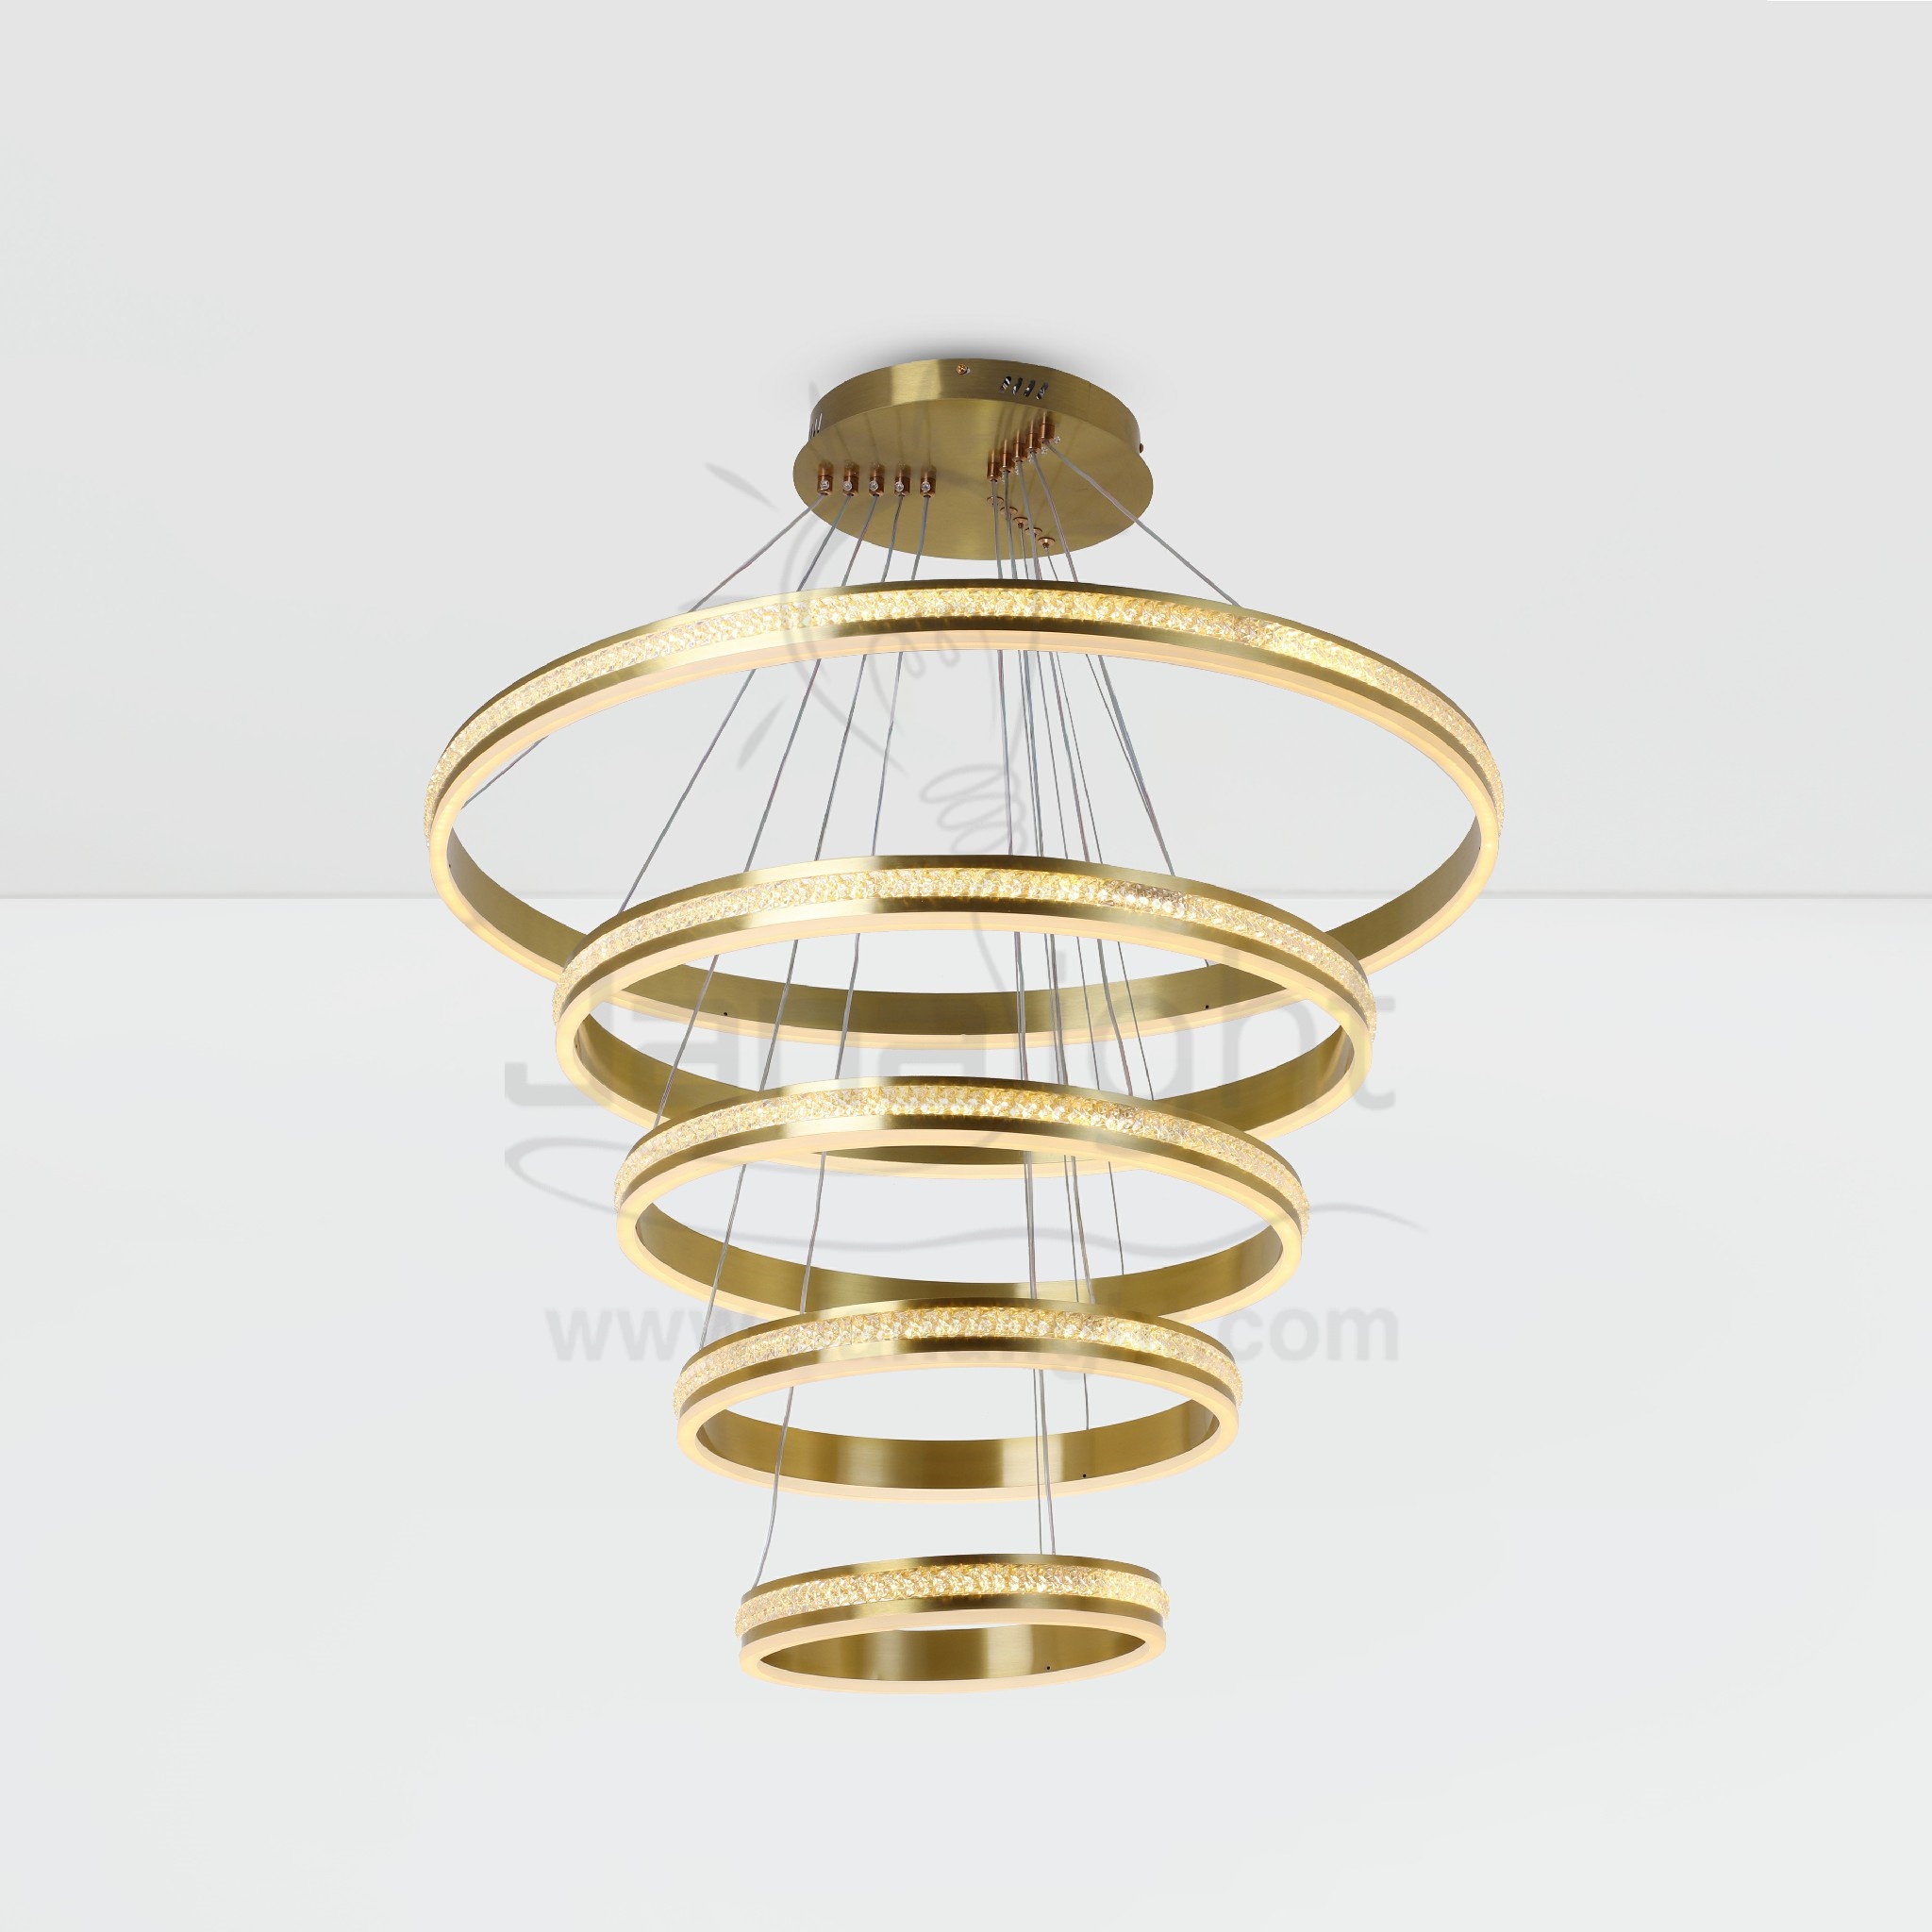 دلاية ليد خمس دوائر اطار شكل كريستال Modern luminaire hanglamp ceiling pendant light led chandeliers crystal gold 5 circular ring